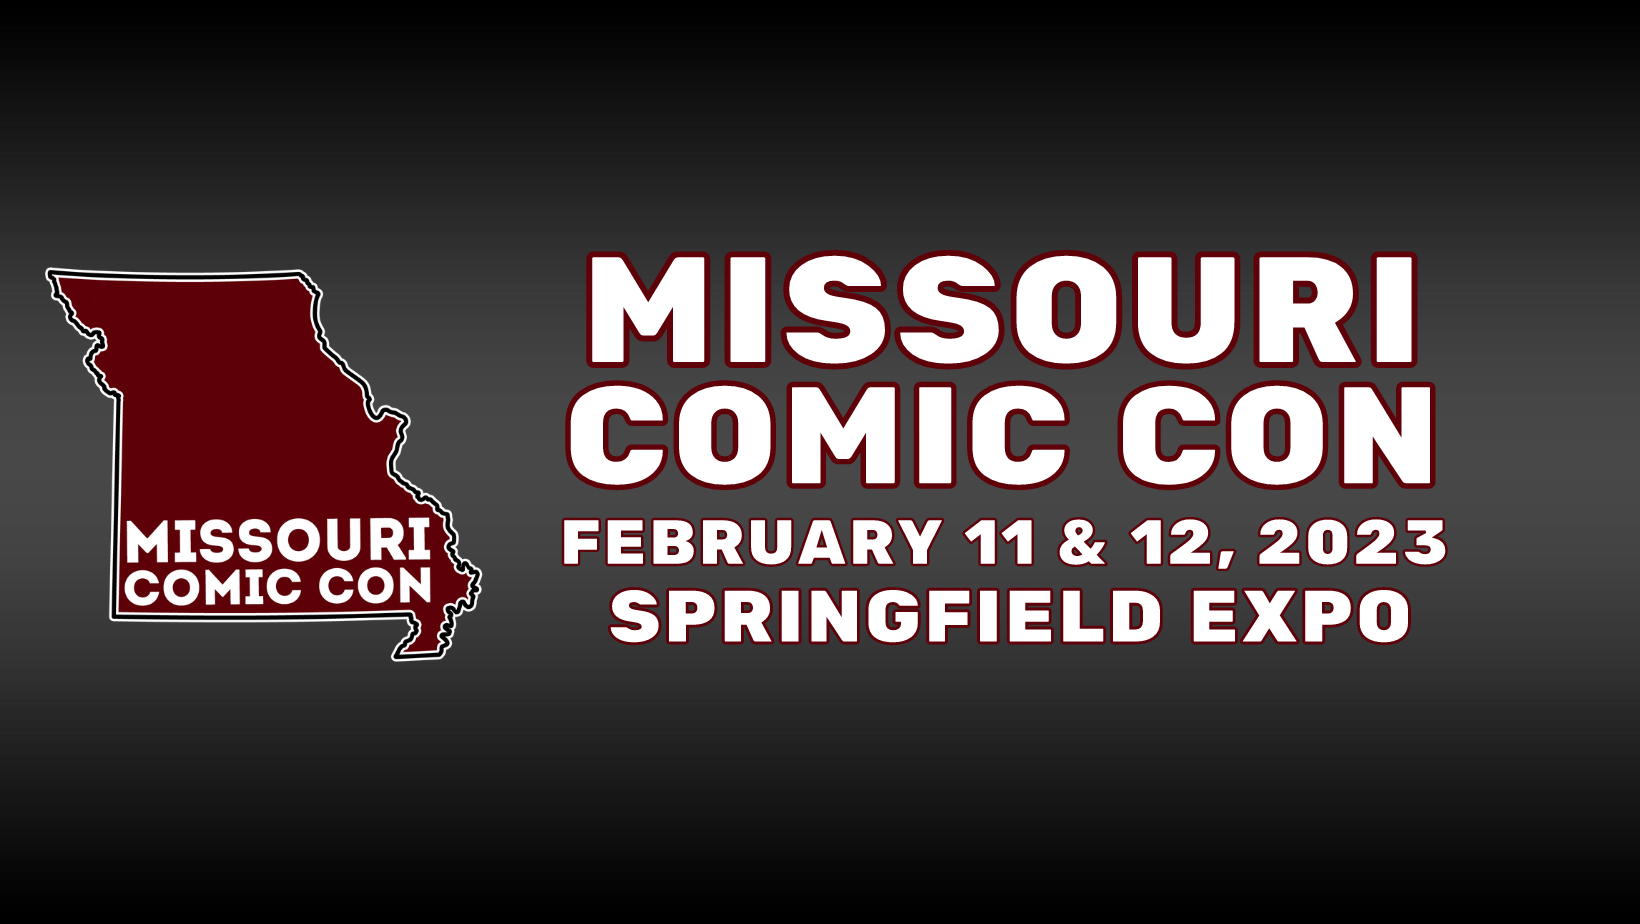 Missouri Comic Con 2023 Tickets at Springfield Expo Center in